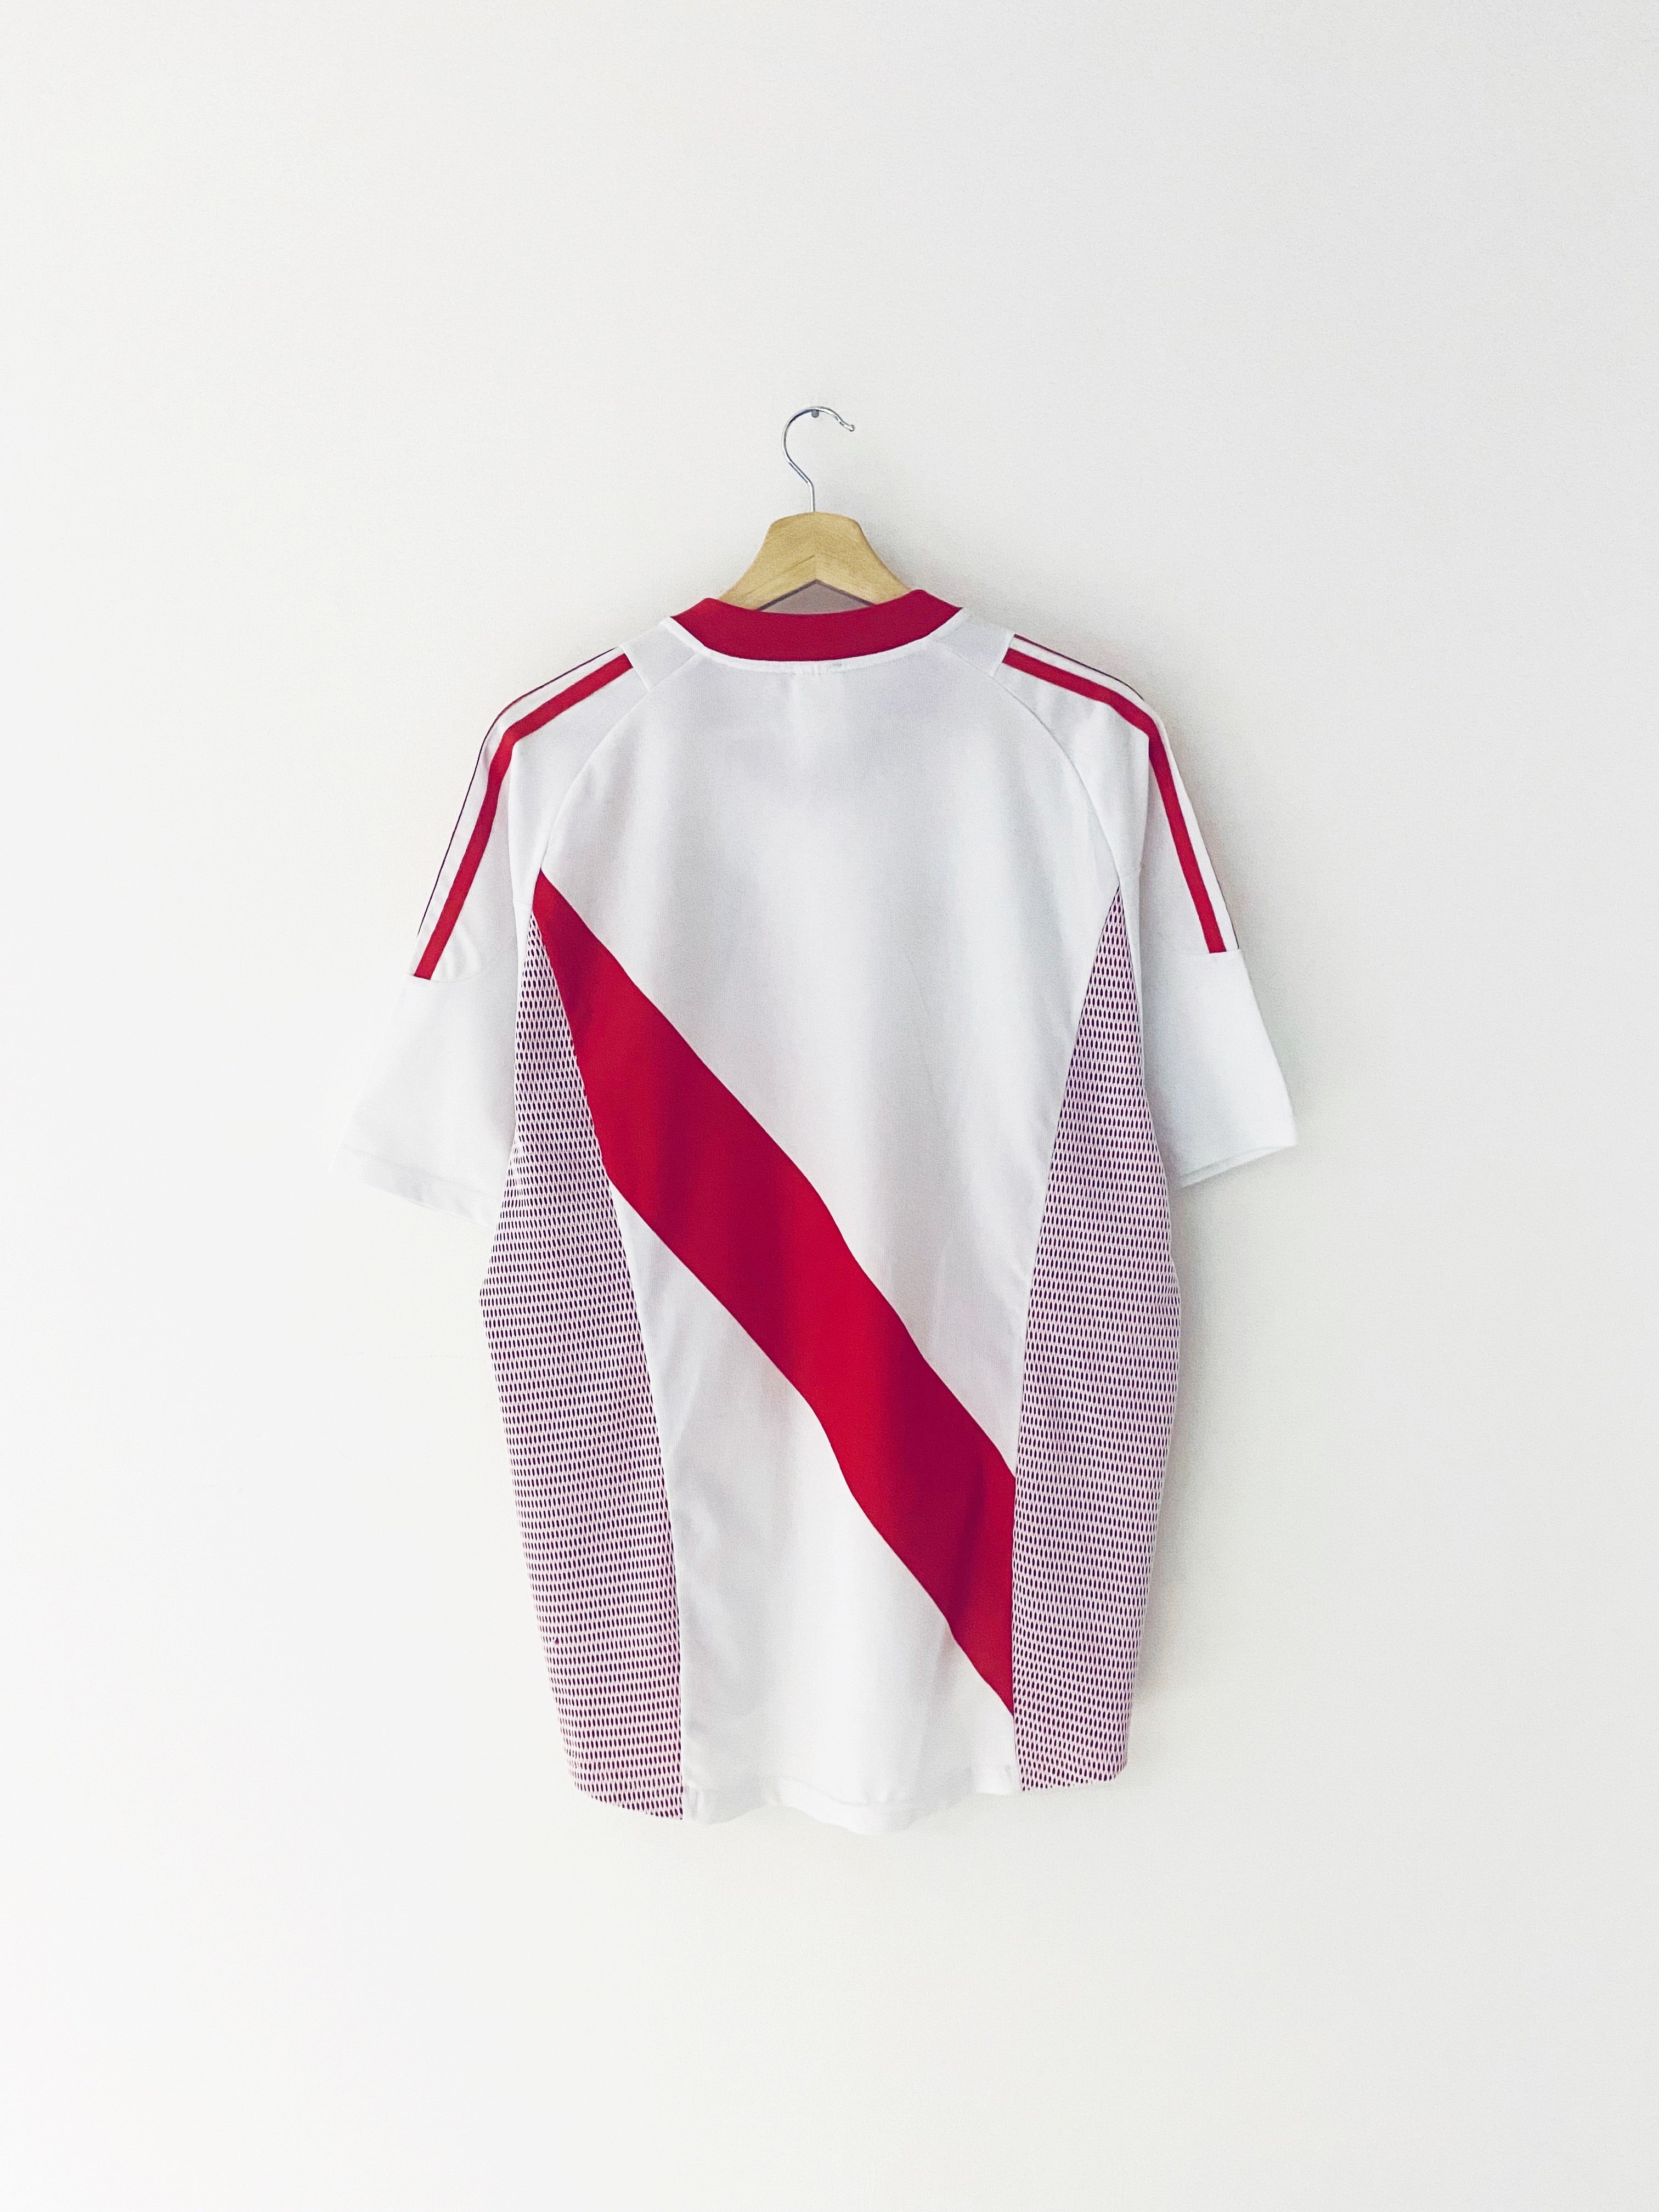 2002/03 River Plate Home Shirt (L) 9/10